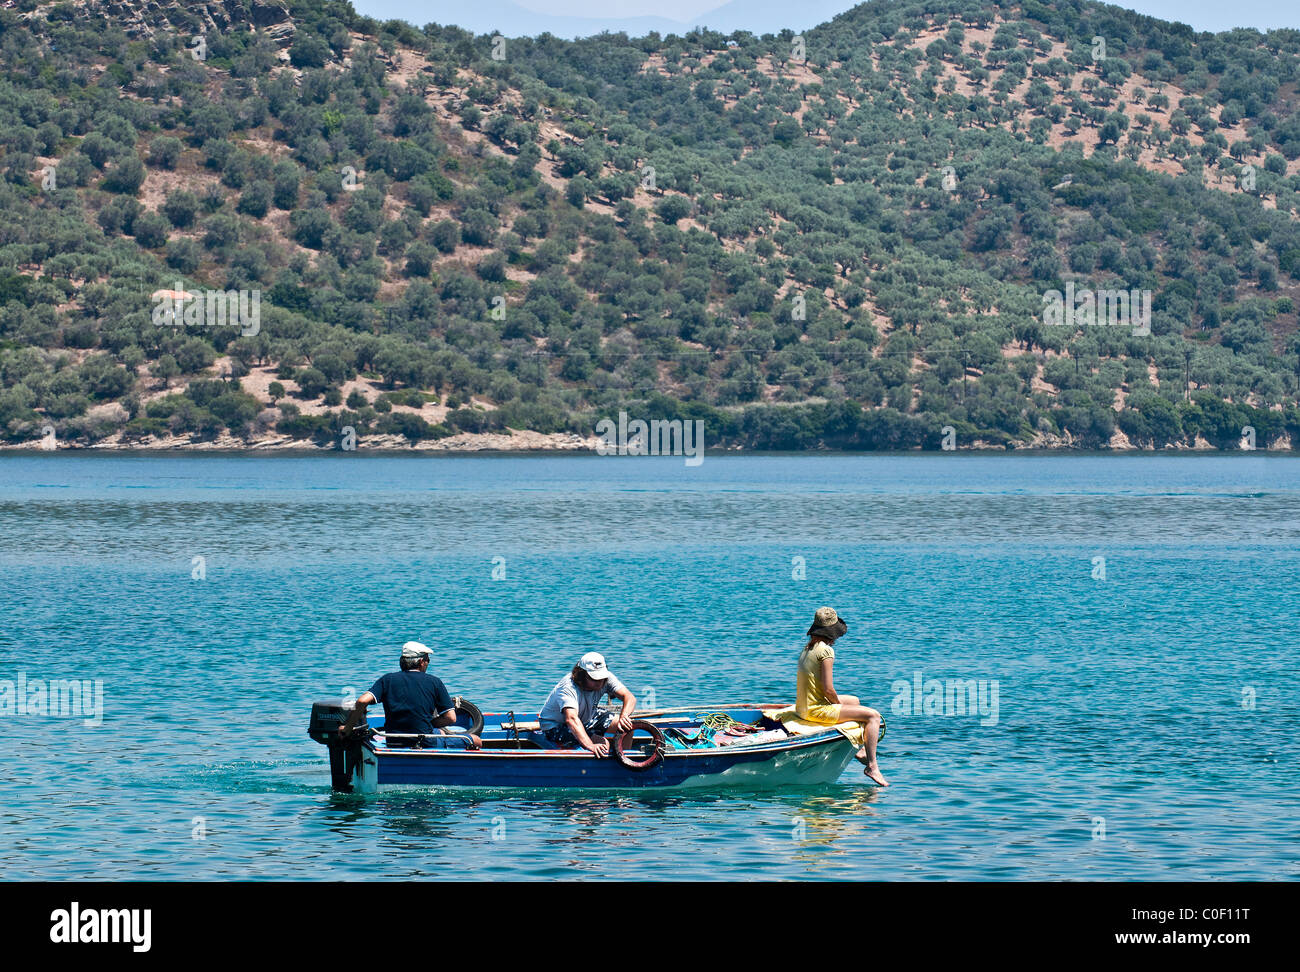 Greek Holiday makers on a boat, near the island of Paleo Trikeri on the southern coast of the Pelion Peninsula, Greece Stock Photo